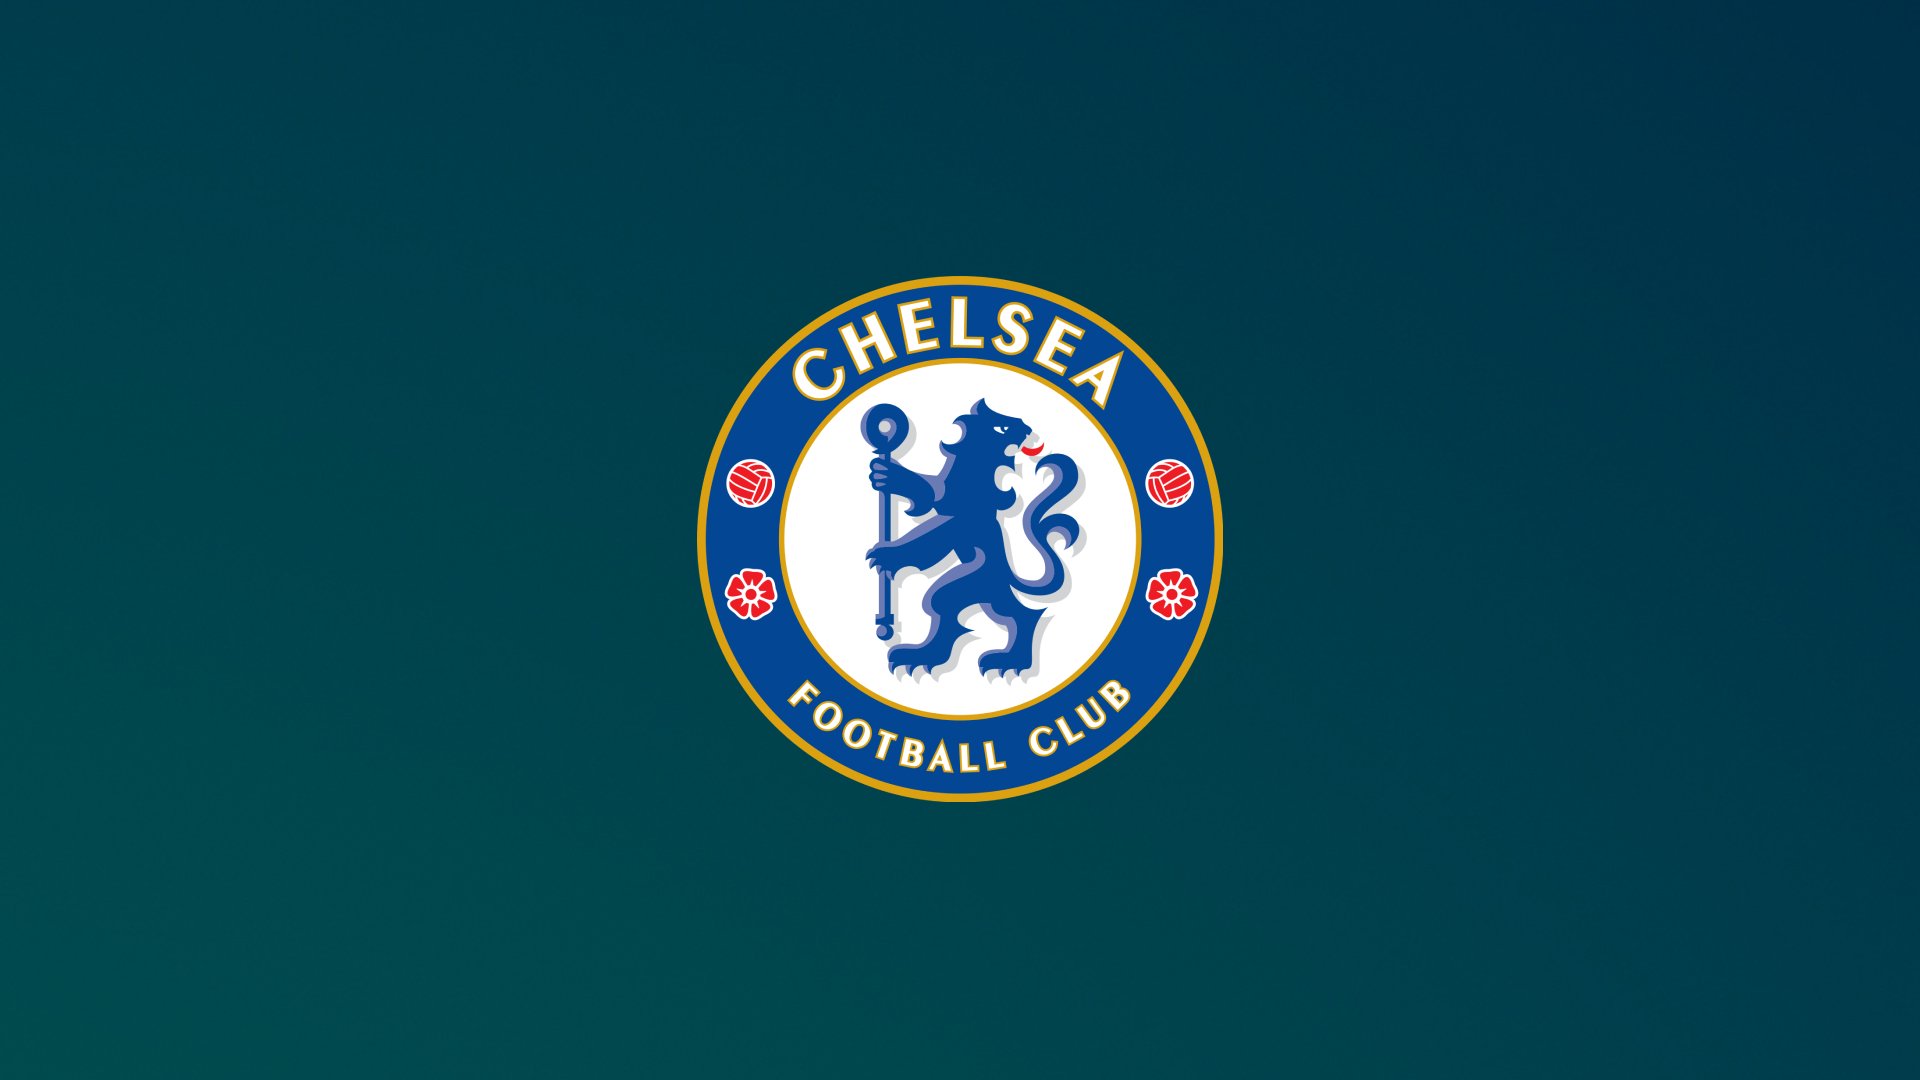 Chelsea FCden Kripto Para Firmasiyla Sponsorluk Anlasmasi